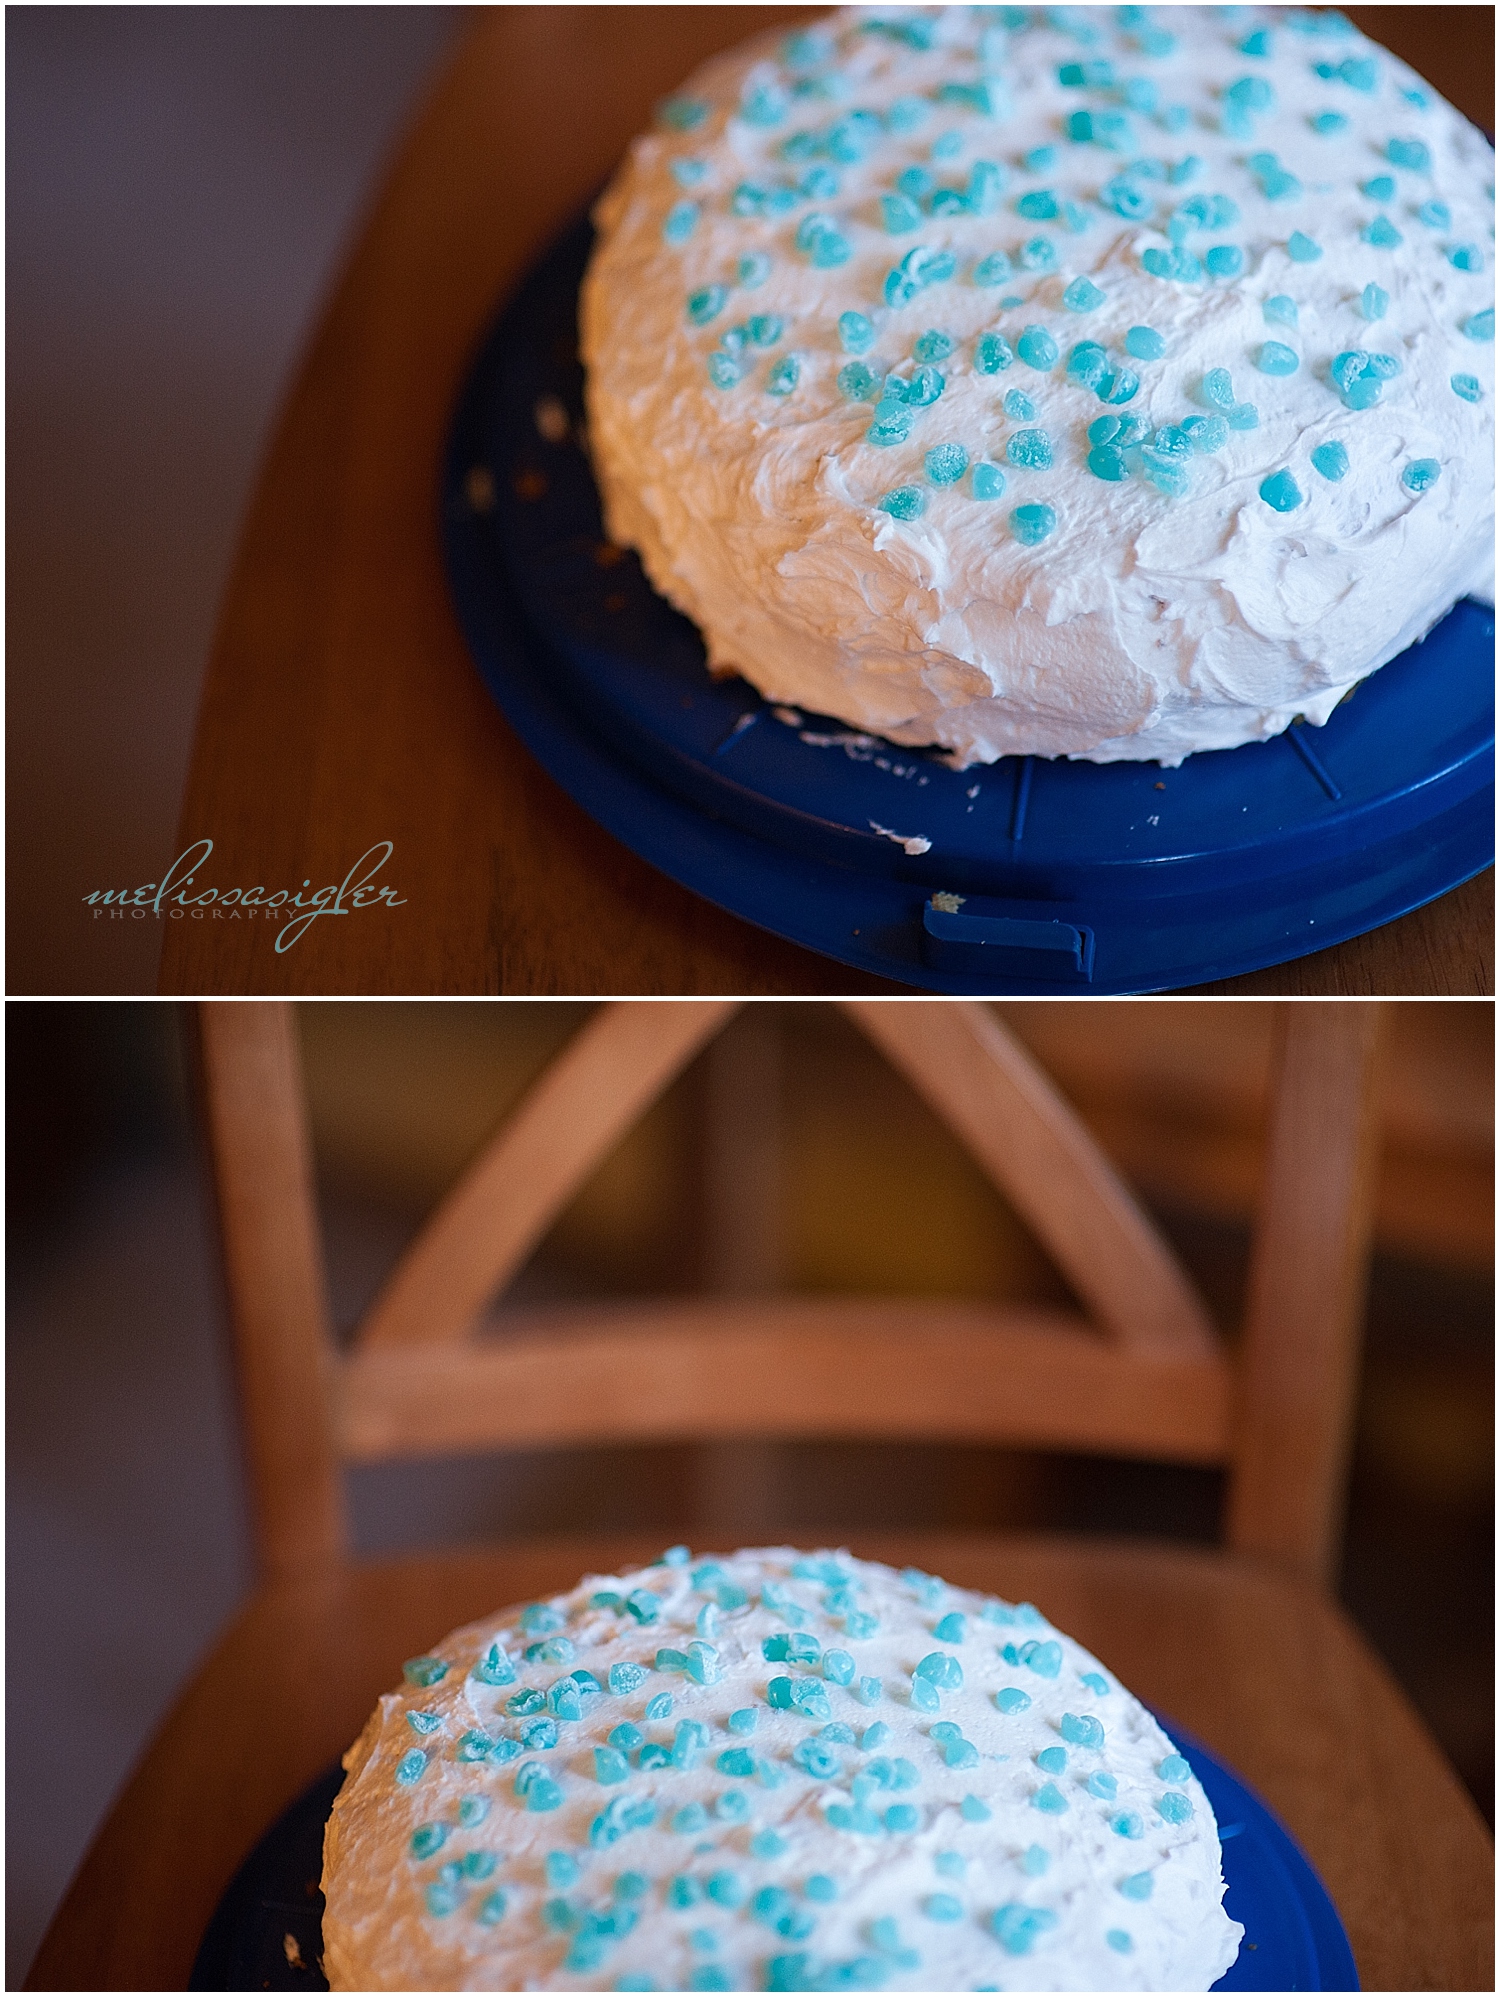 breaking-bad-finale-blue-sky-cake-recipe-melissa-sigler-photography-007_blog